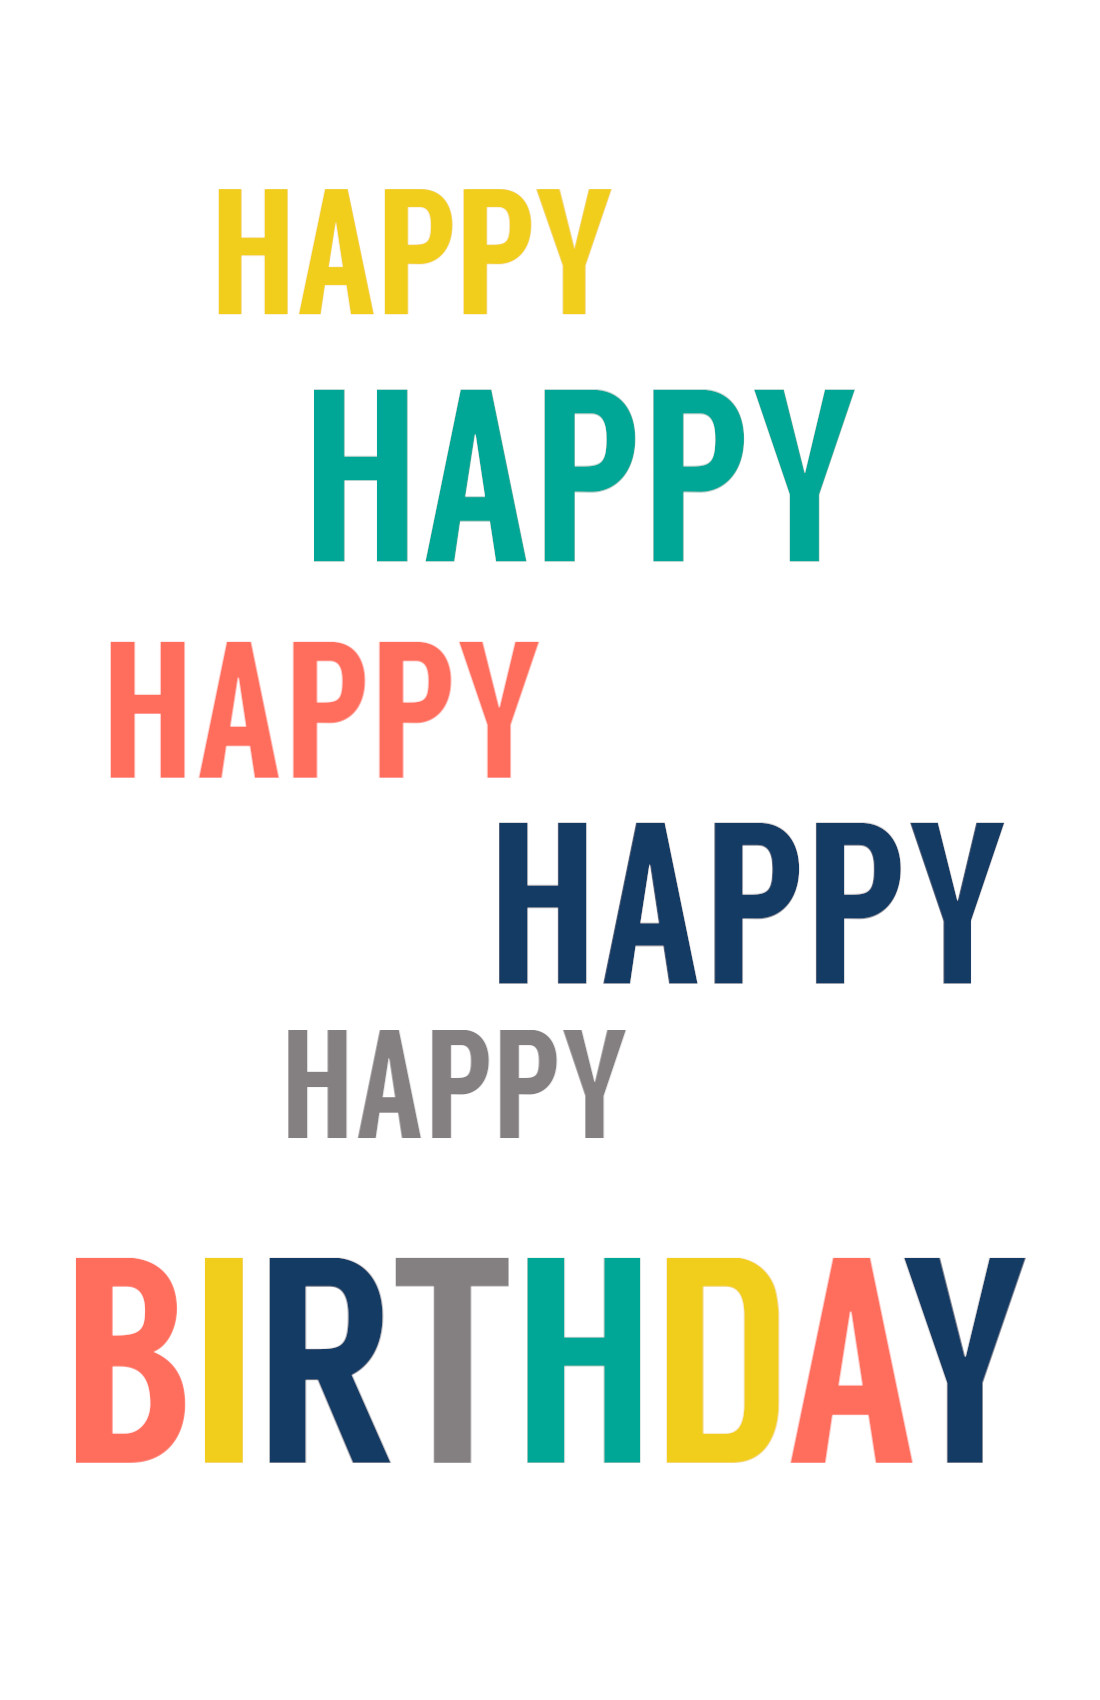 Free Printable Birthday Cards
 Free Printable Birthday Cards Paper Trail Design